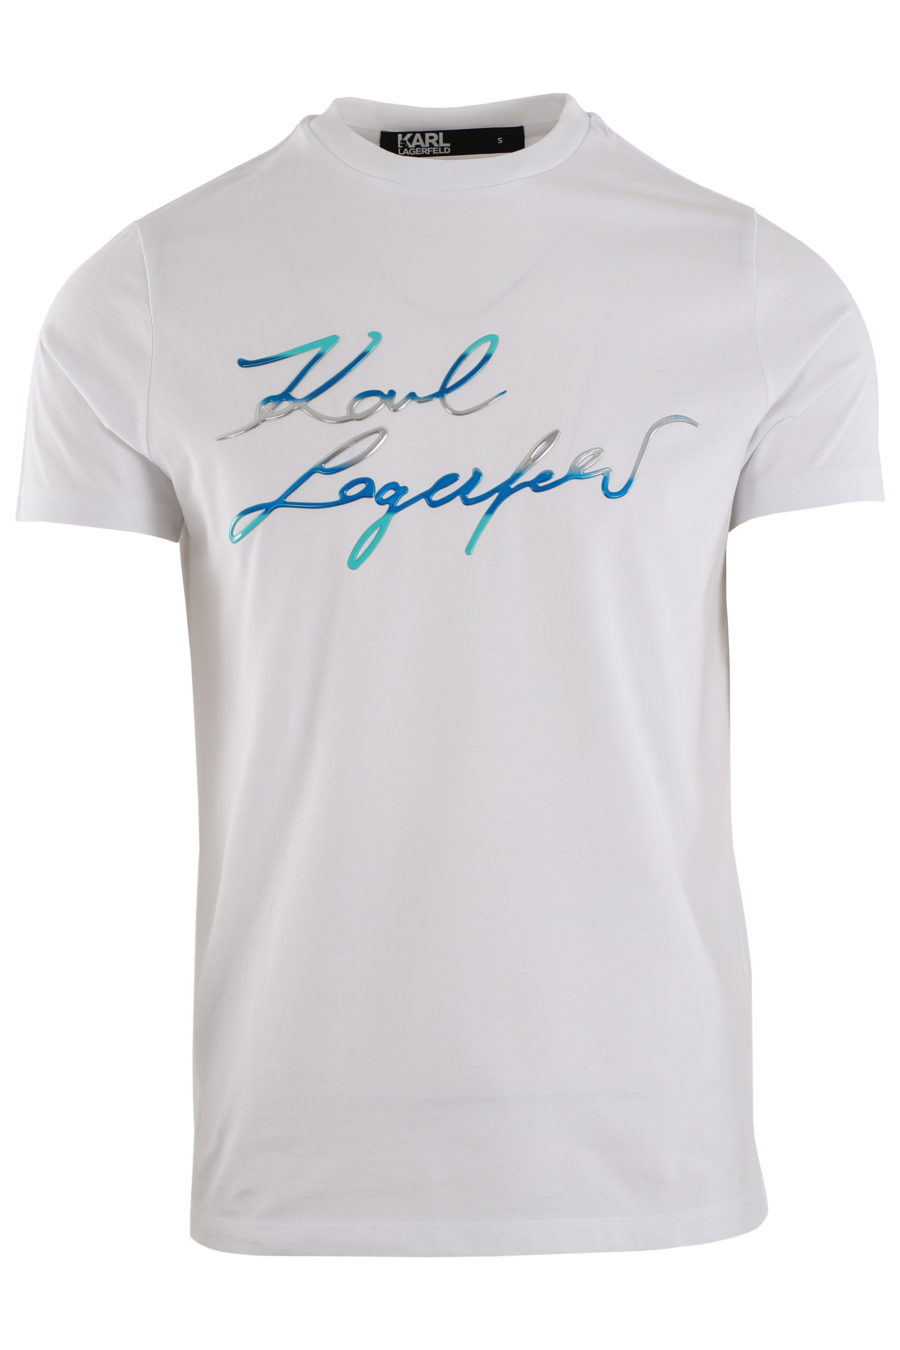 Camiseta blanca con logo azul multicolor - IMG 0428